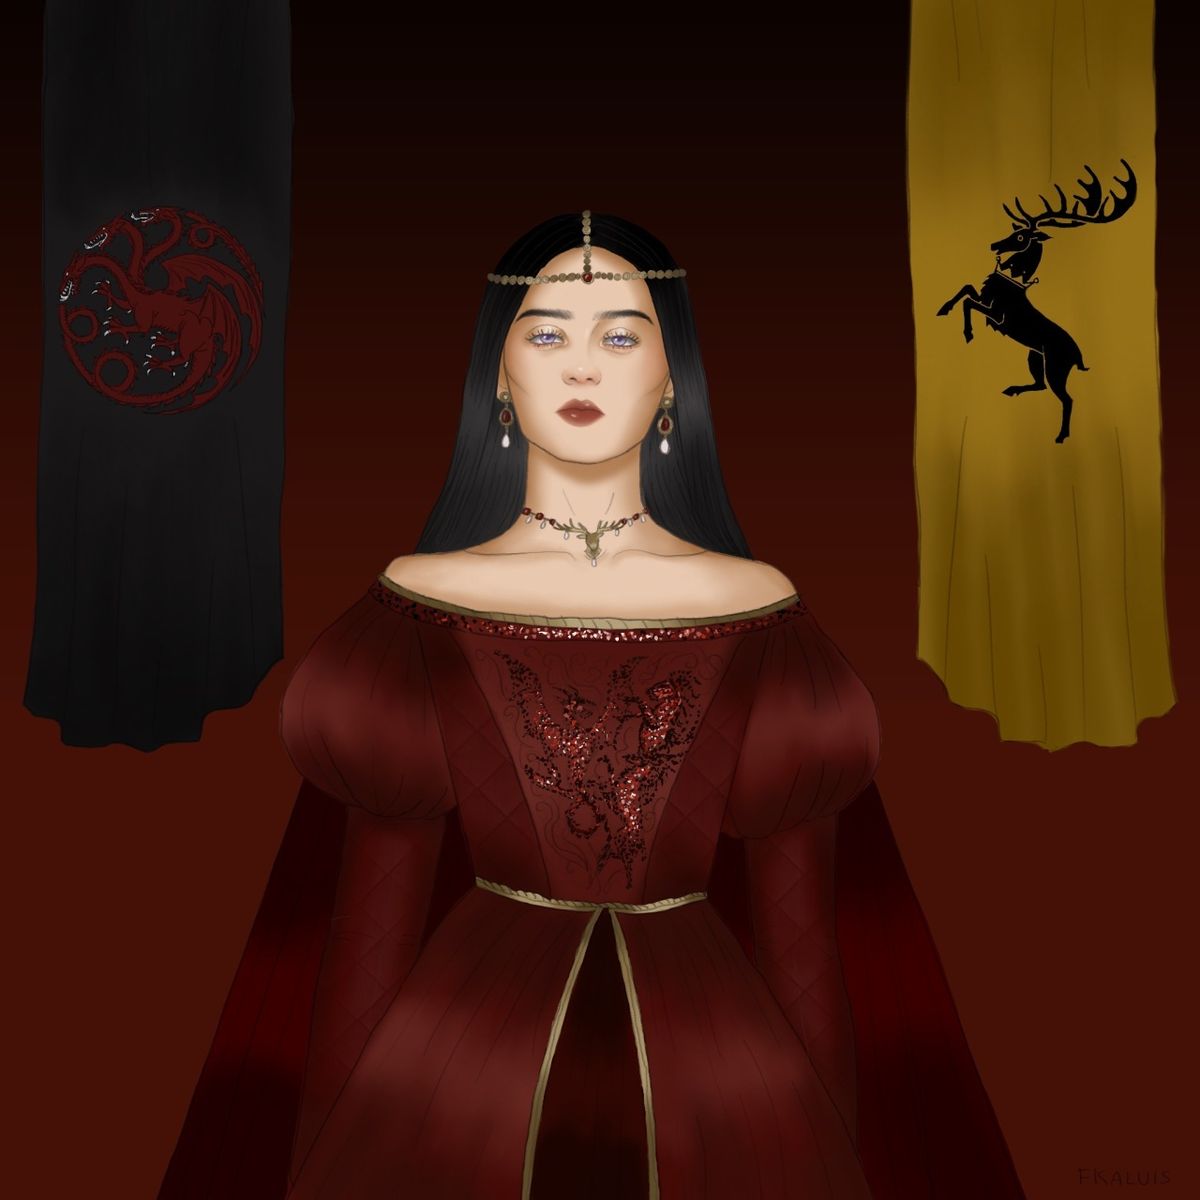 Rhaenys Targaryen (daughter of Aemon) picture